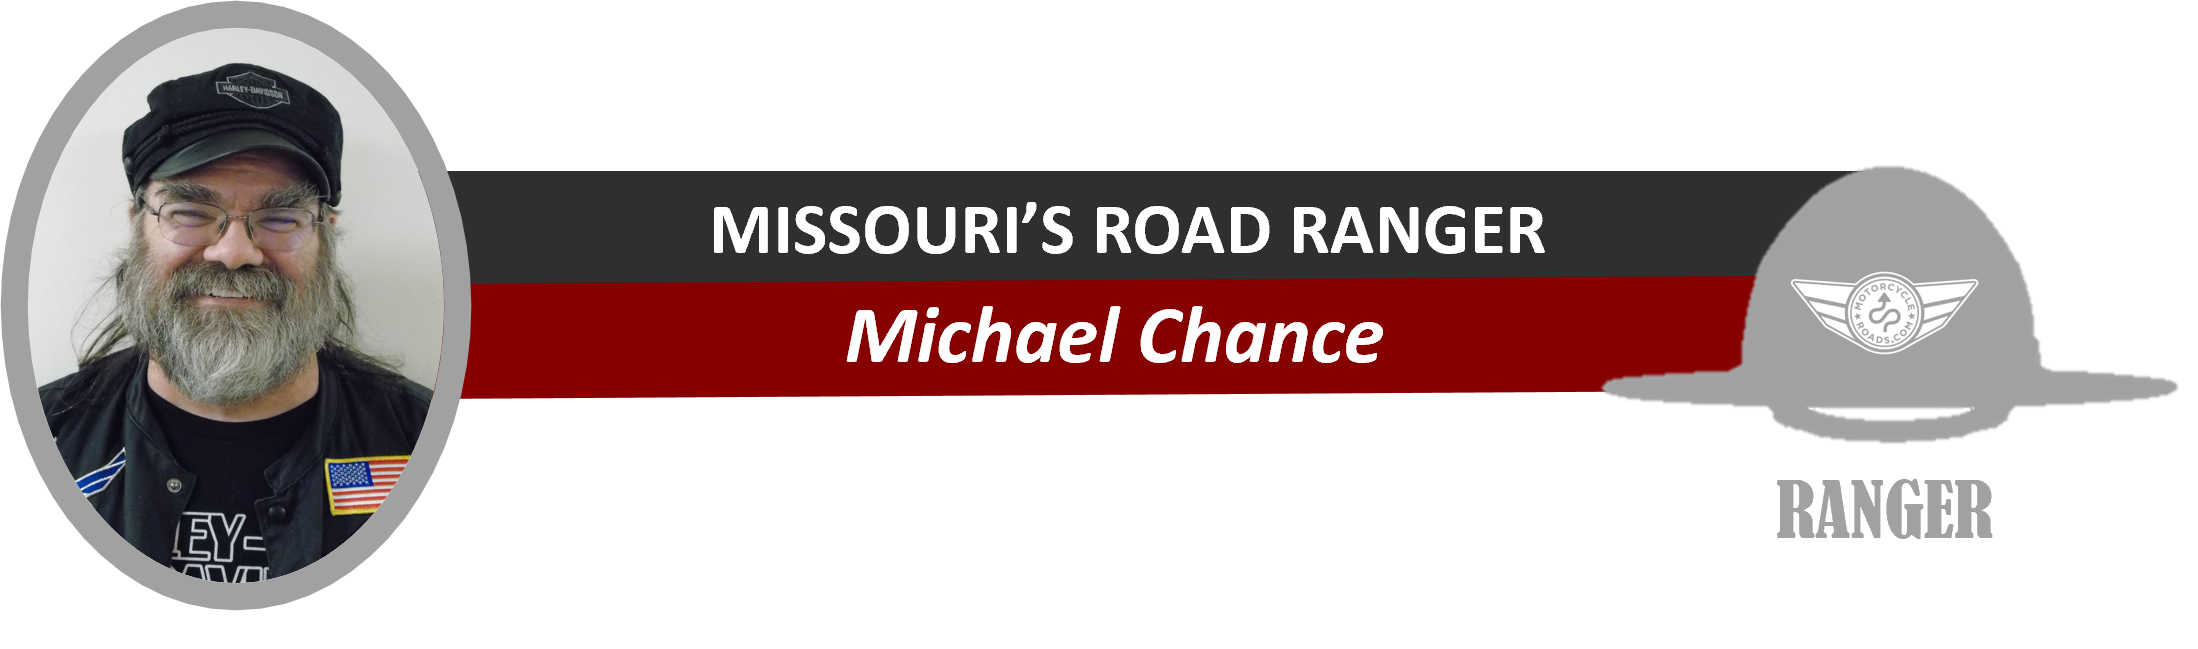 Missouri's motorcycle road ranger